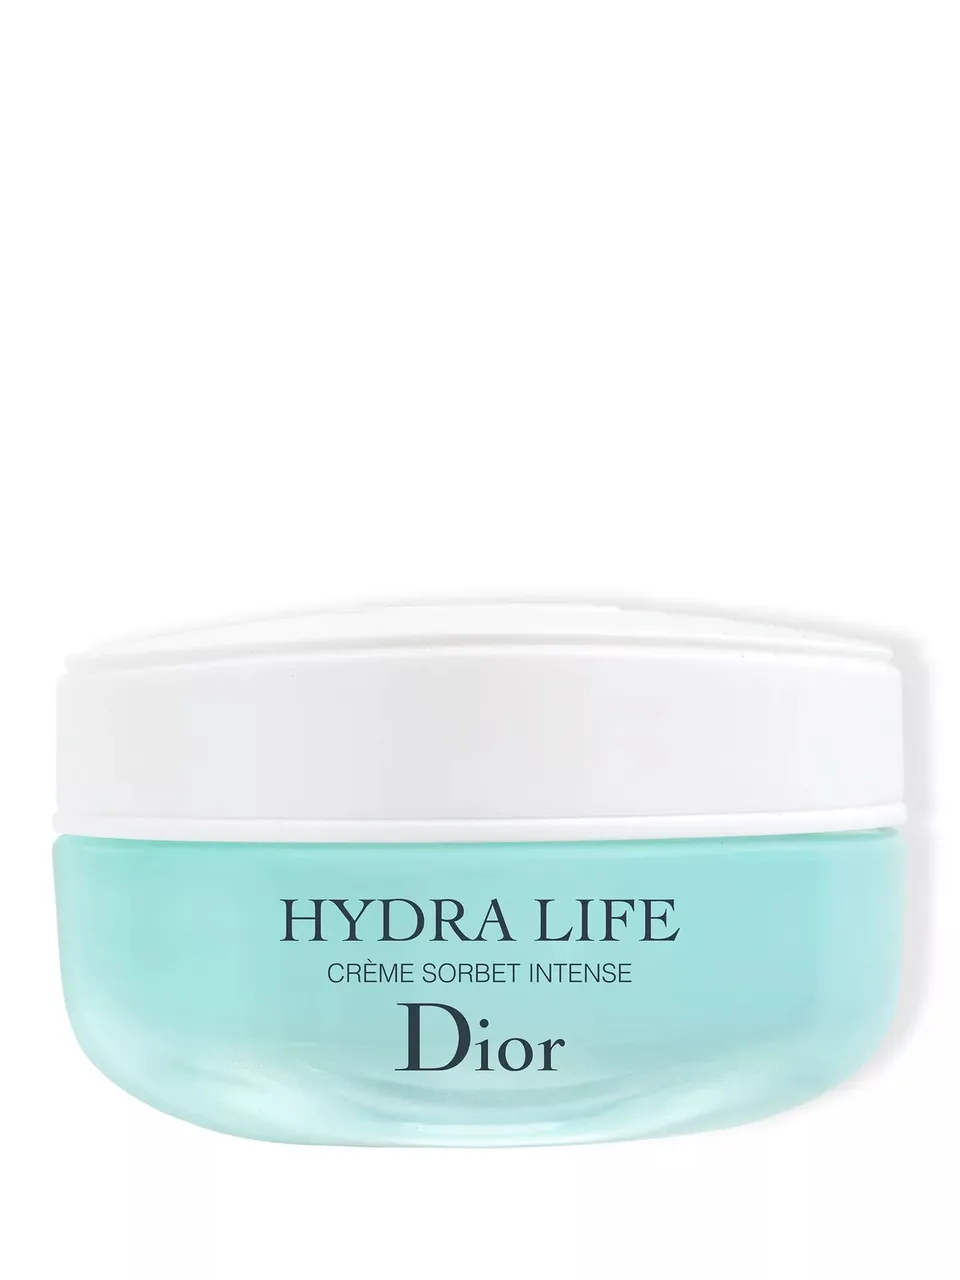 Christian Dior Hydra Life Intense Sorbet Creme, 50ml - Unisex - Size: 50ml